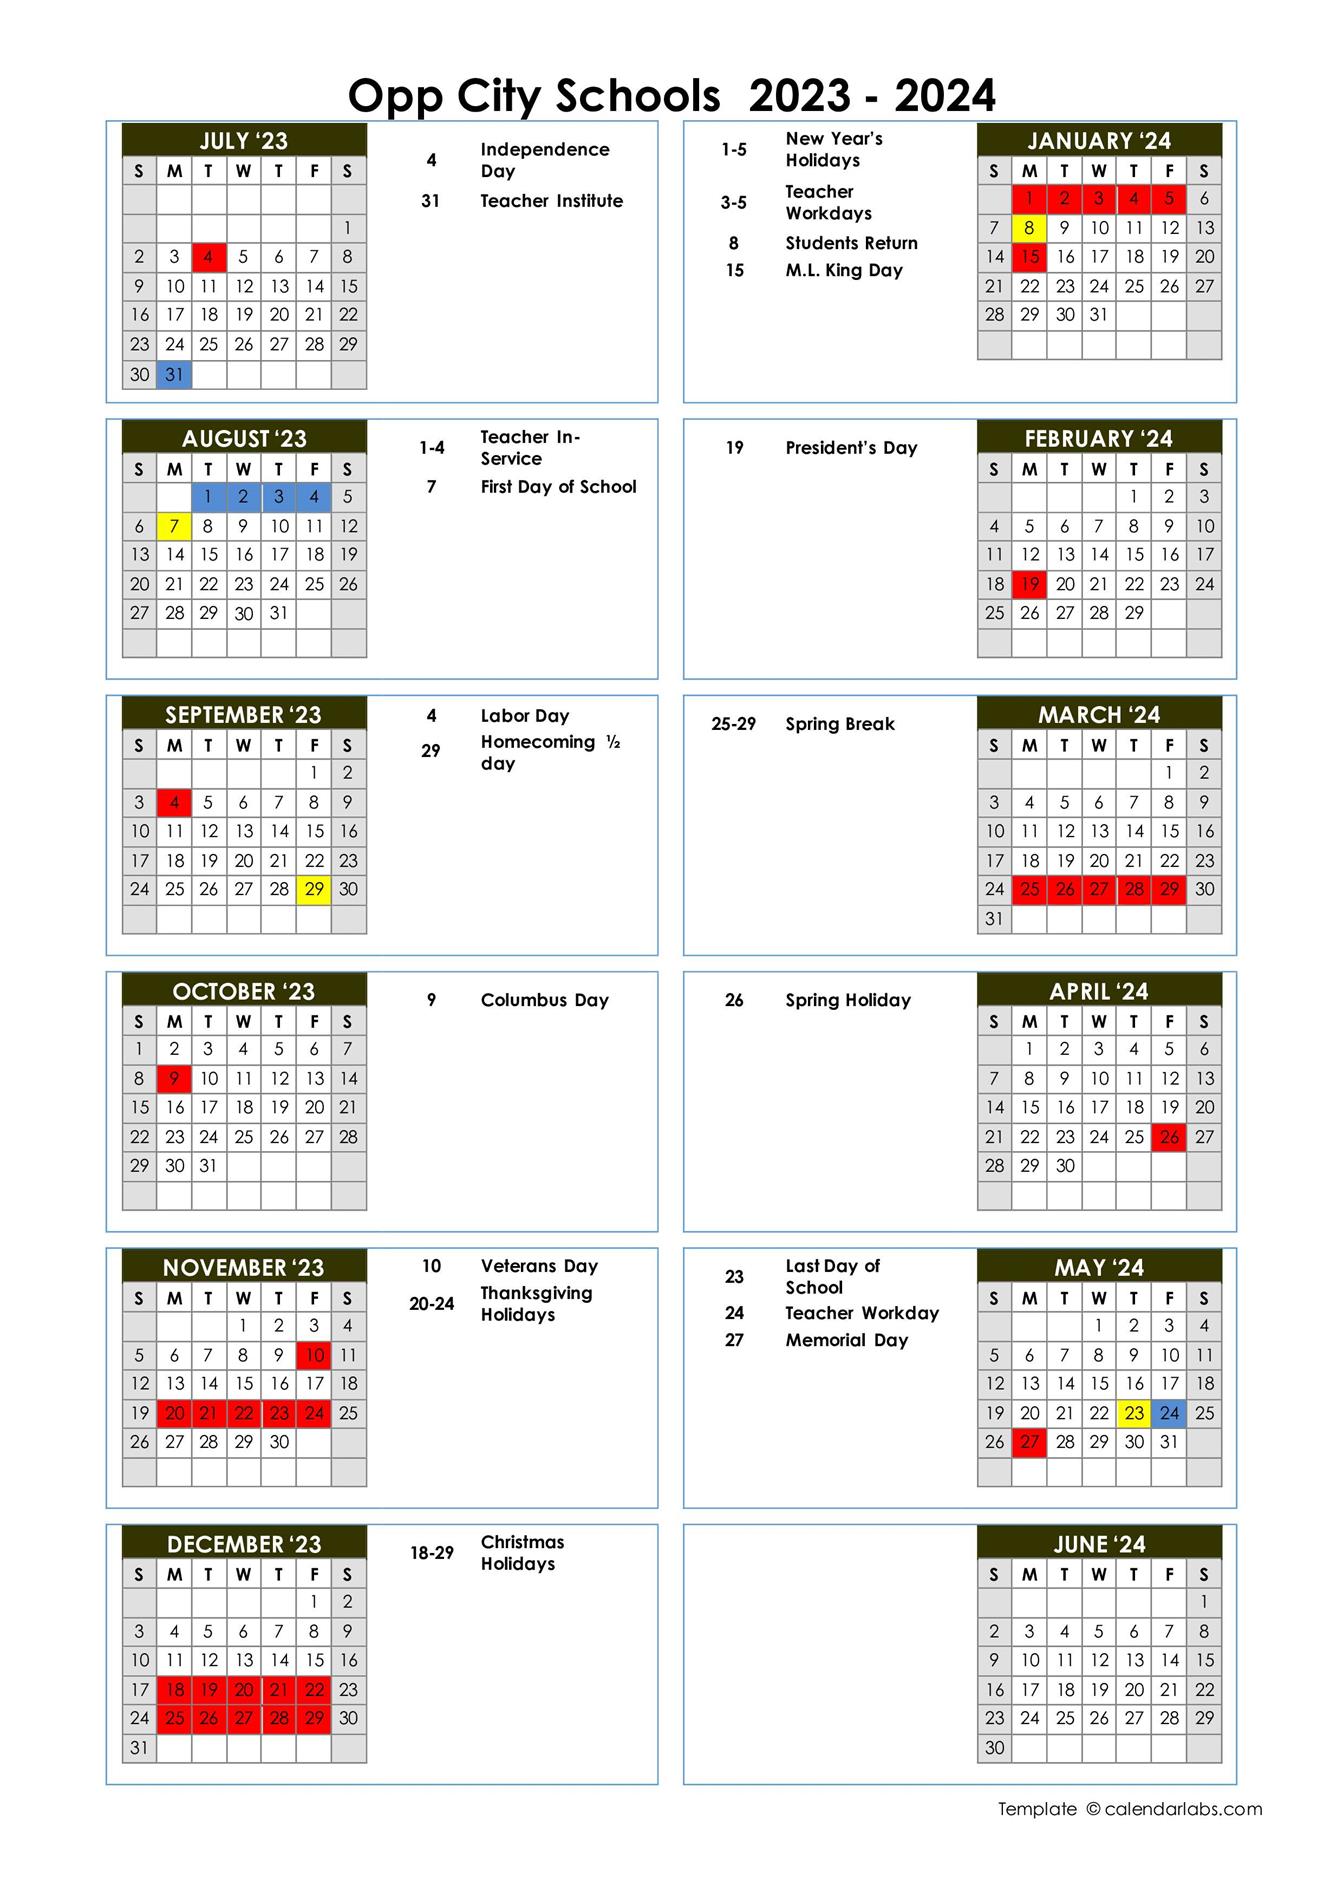 calendar 23-24